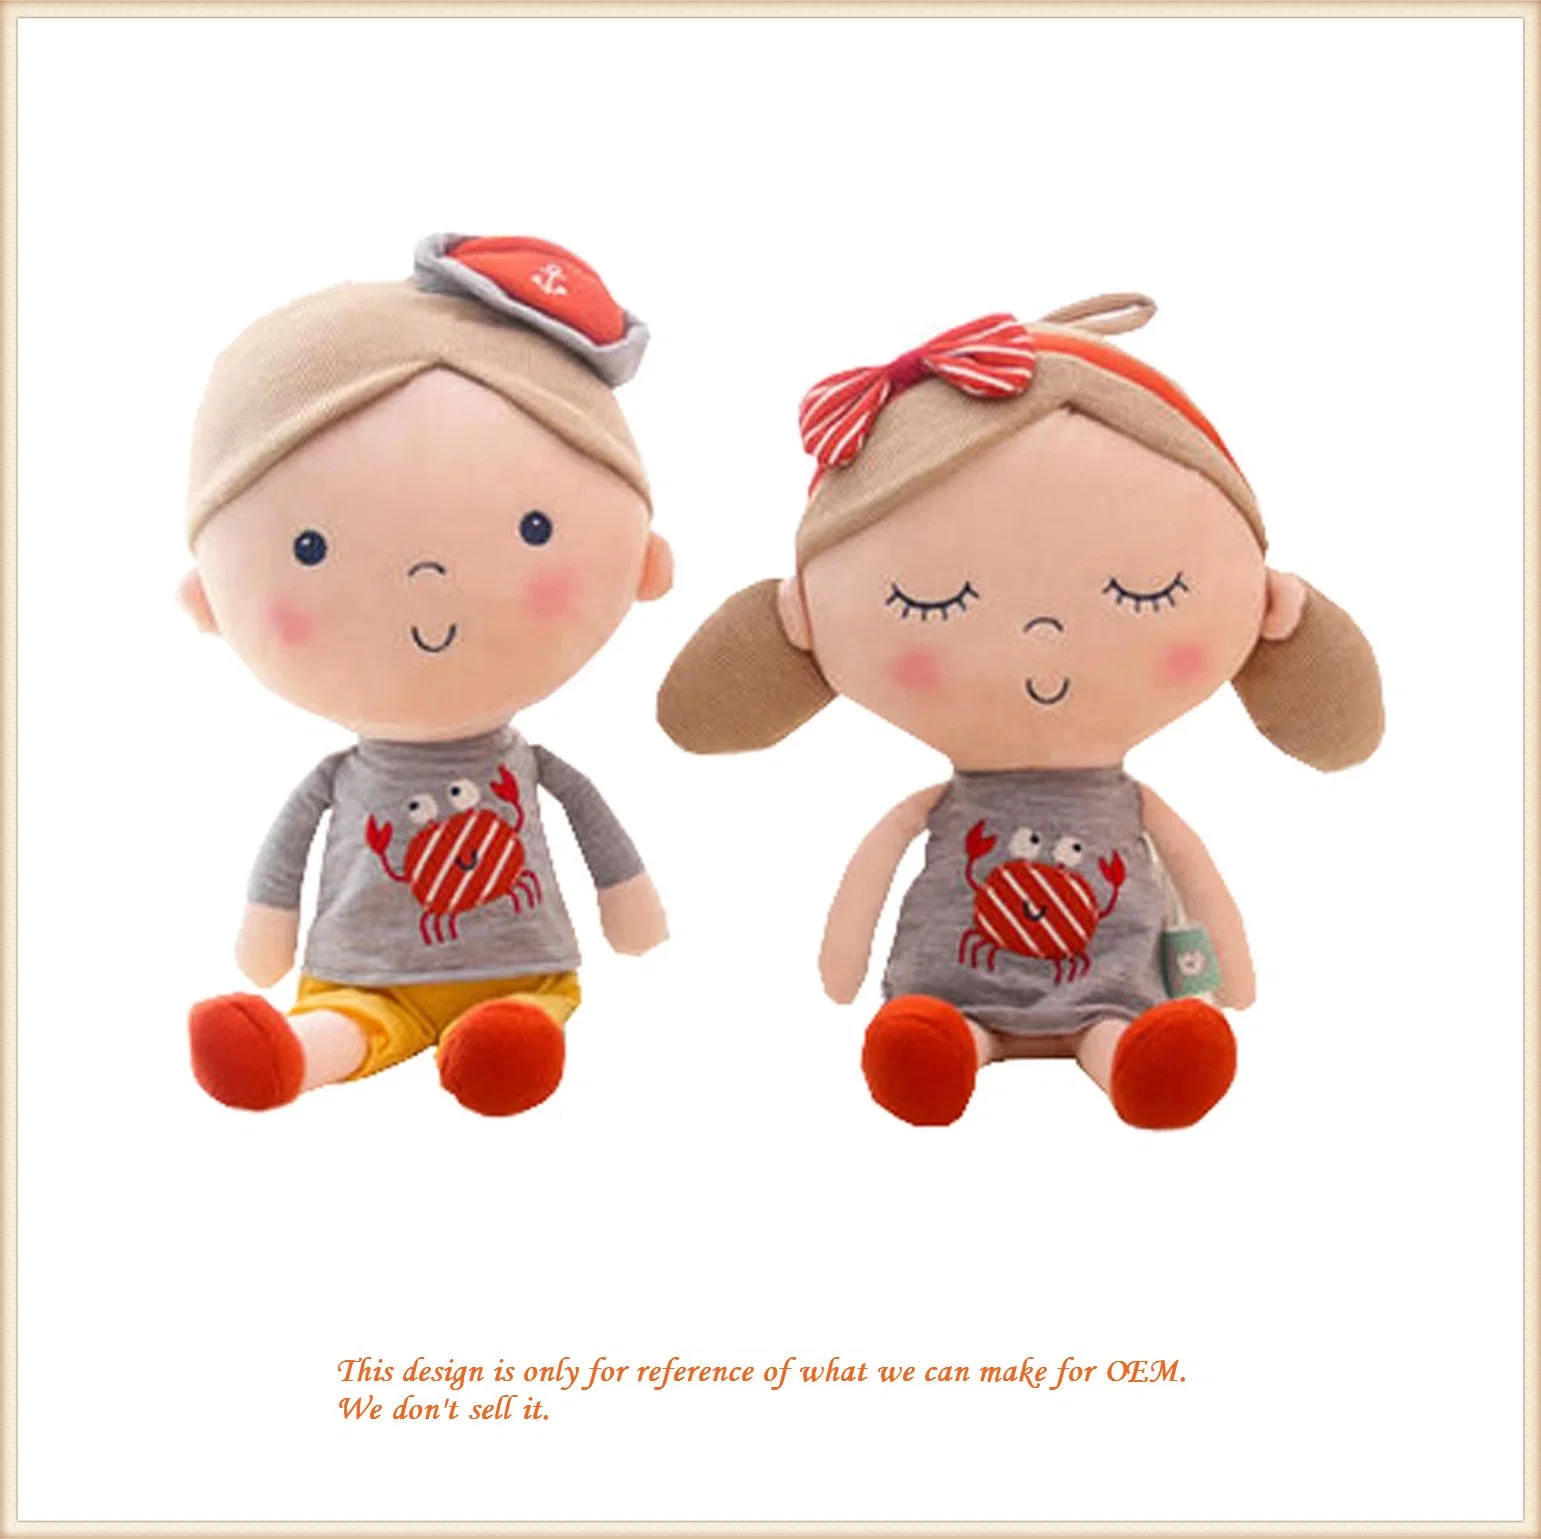 Cute Cotton Plush Soft Toys Companion Rabbit Doll Couple Toys